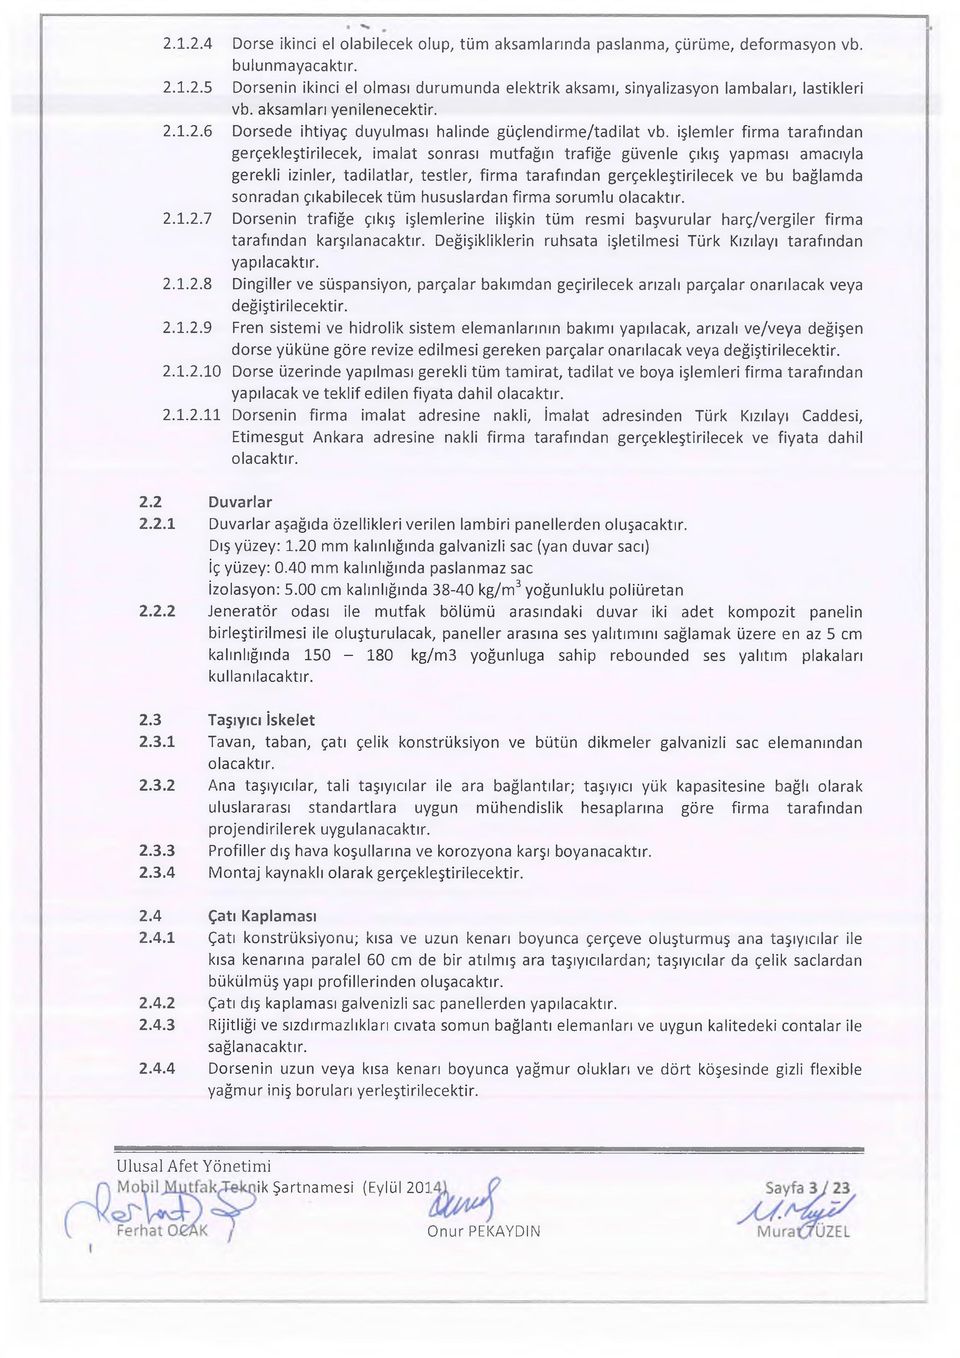 Mobil Mutfak Teknik Şartnamesi - PDF Free Download